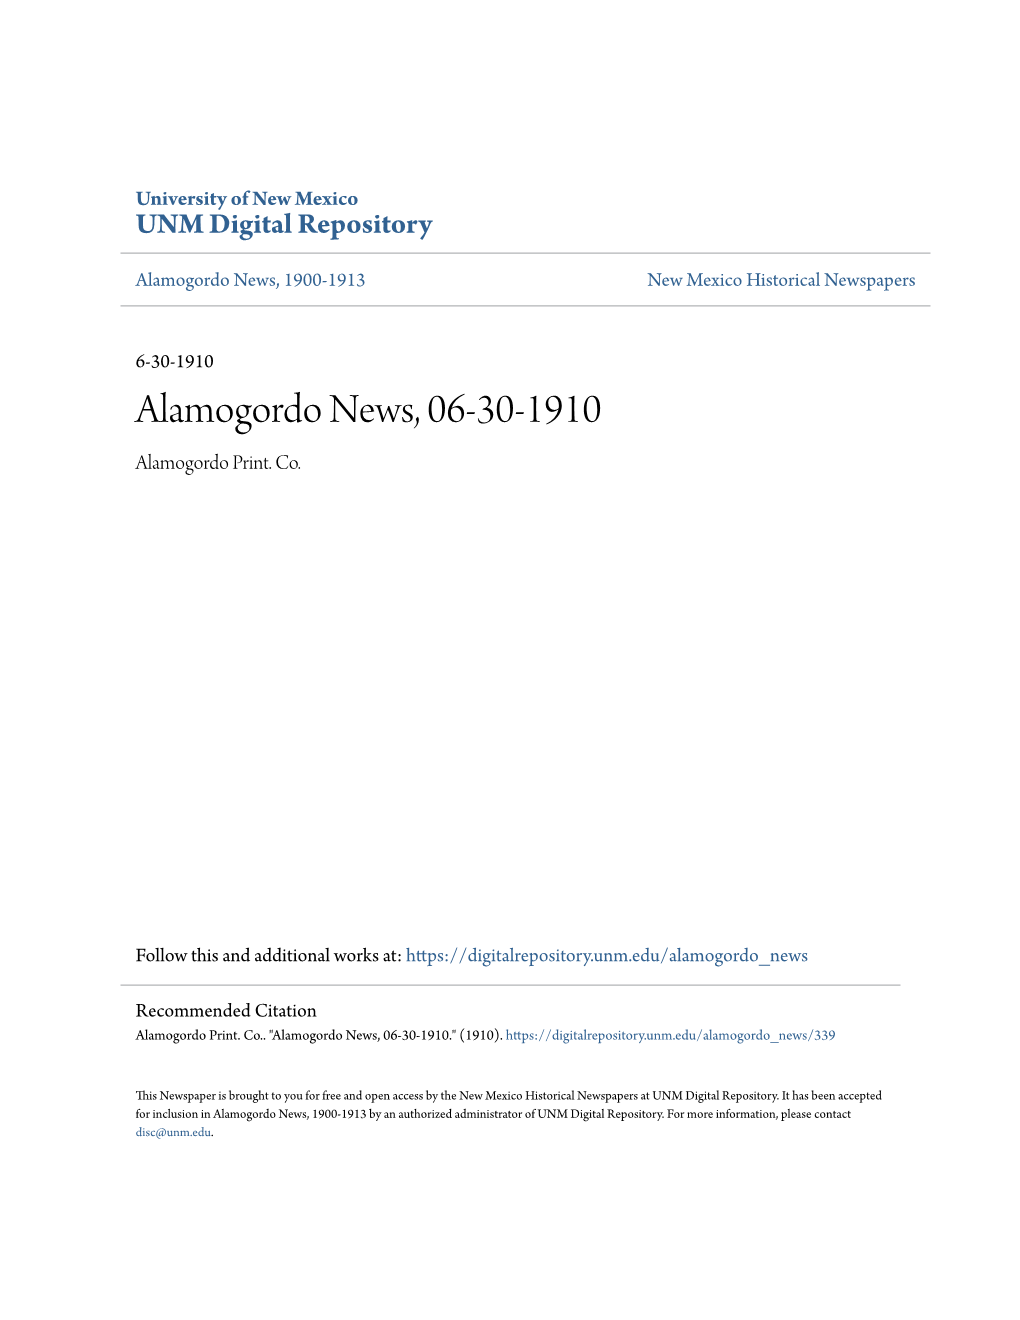 Alamogordo News, 06-30-1910 Alamogordo Print